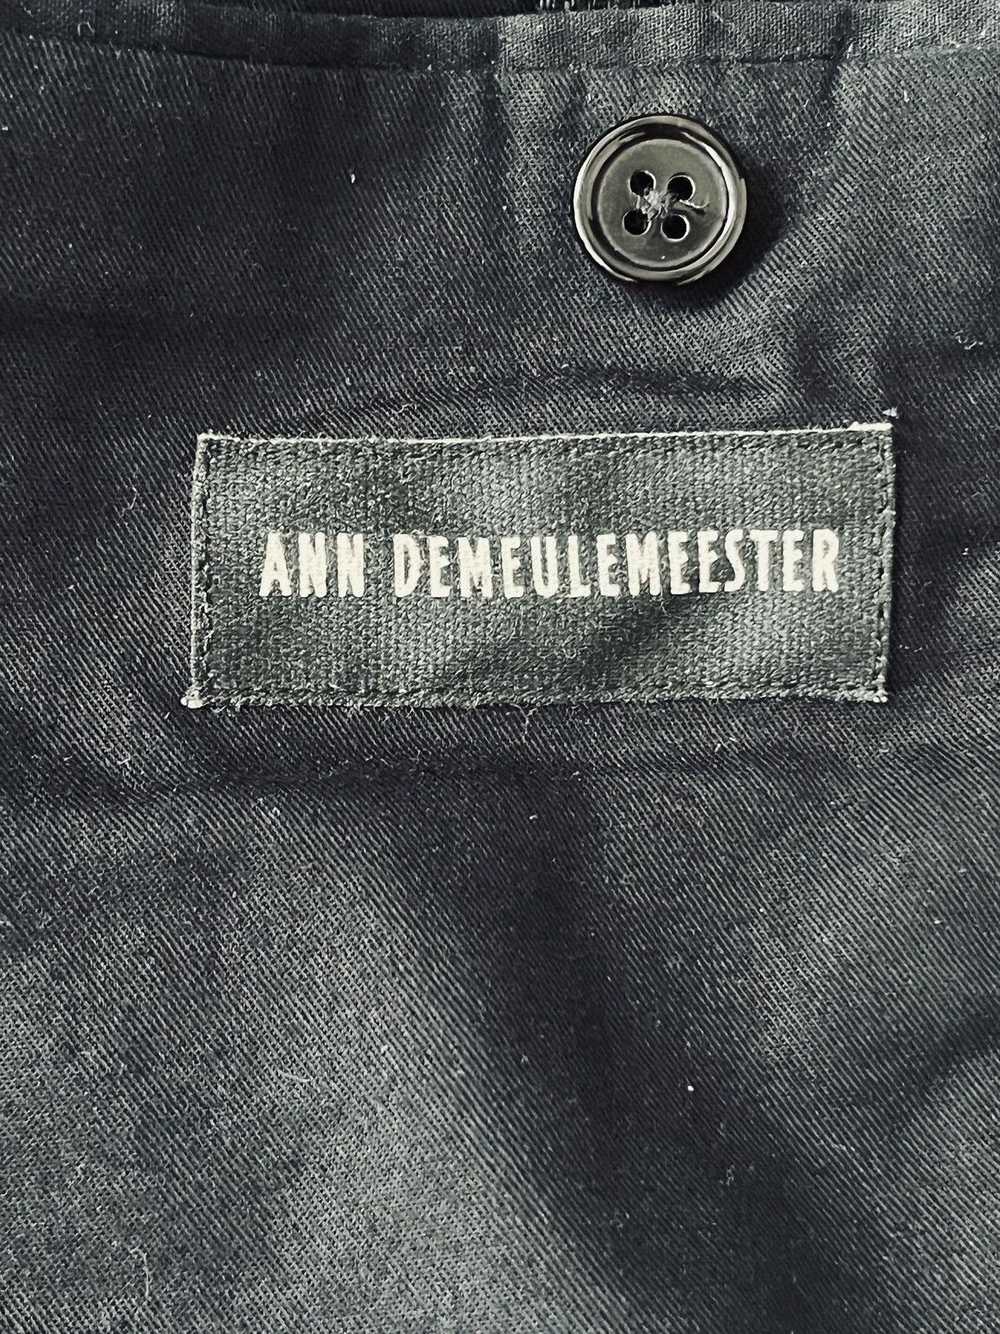 Ann Demeulemeester Black Jacket - image 3